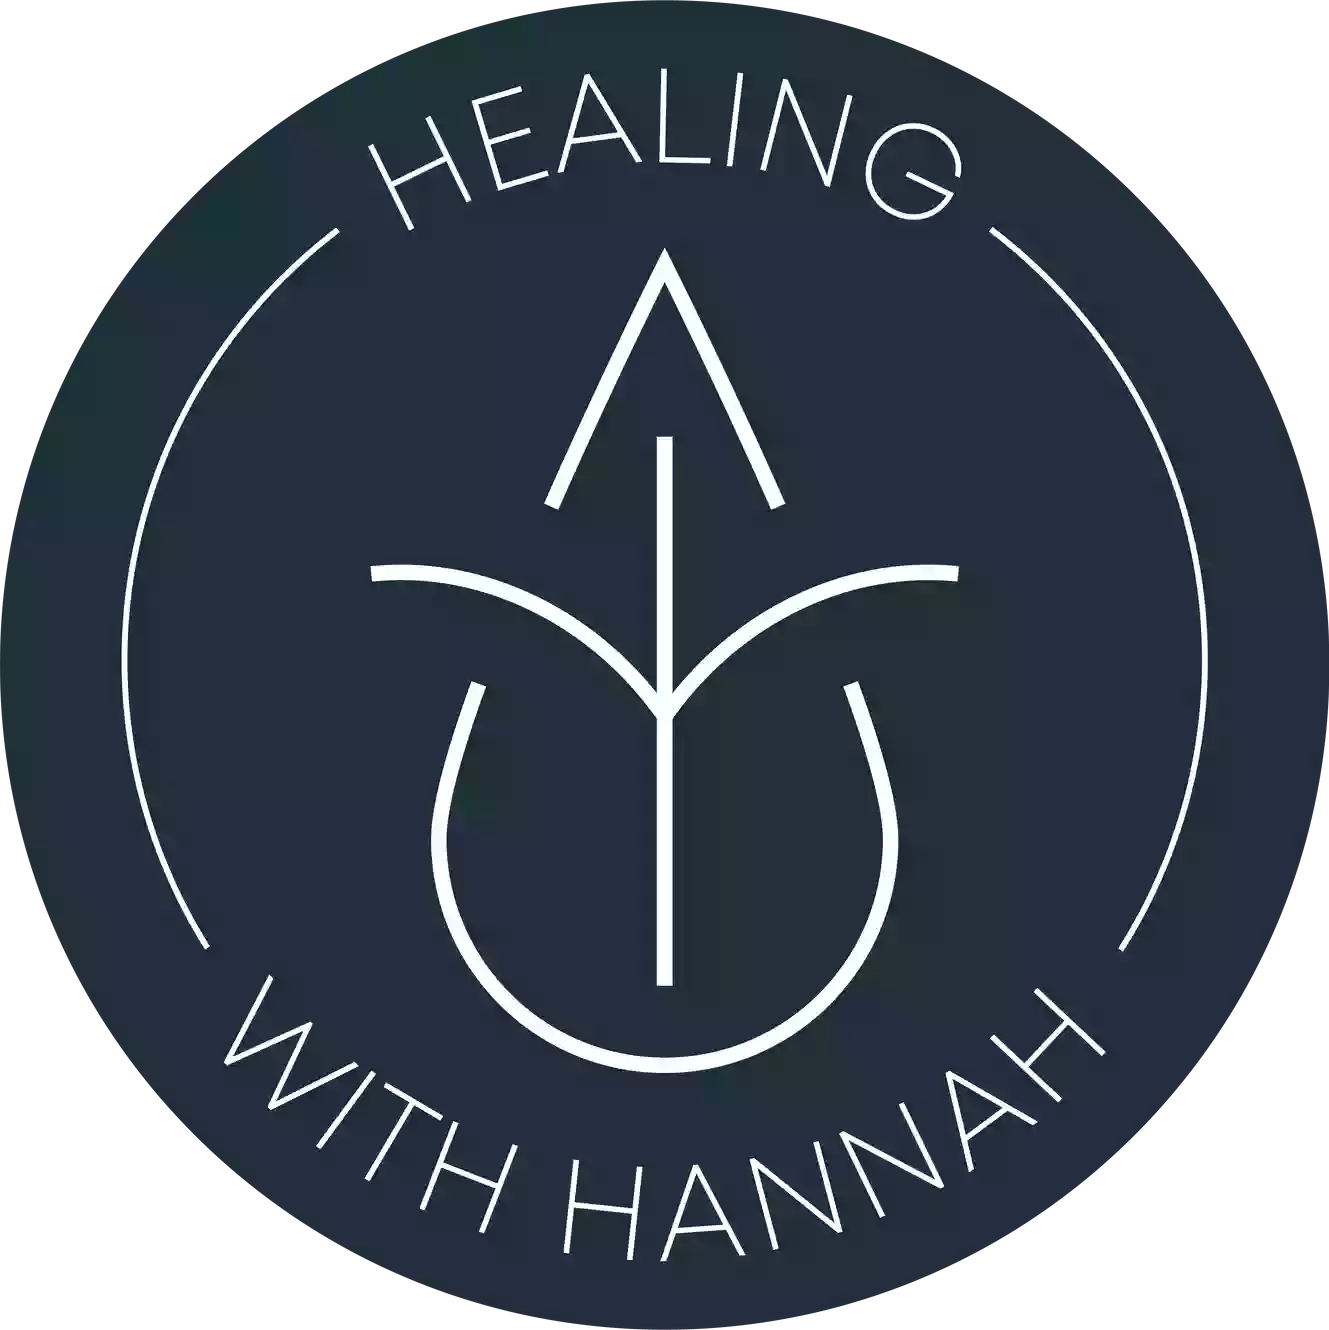 Healing with Hannah